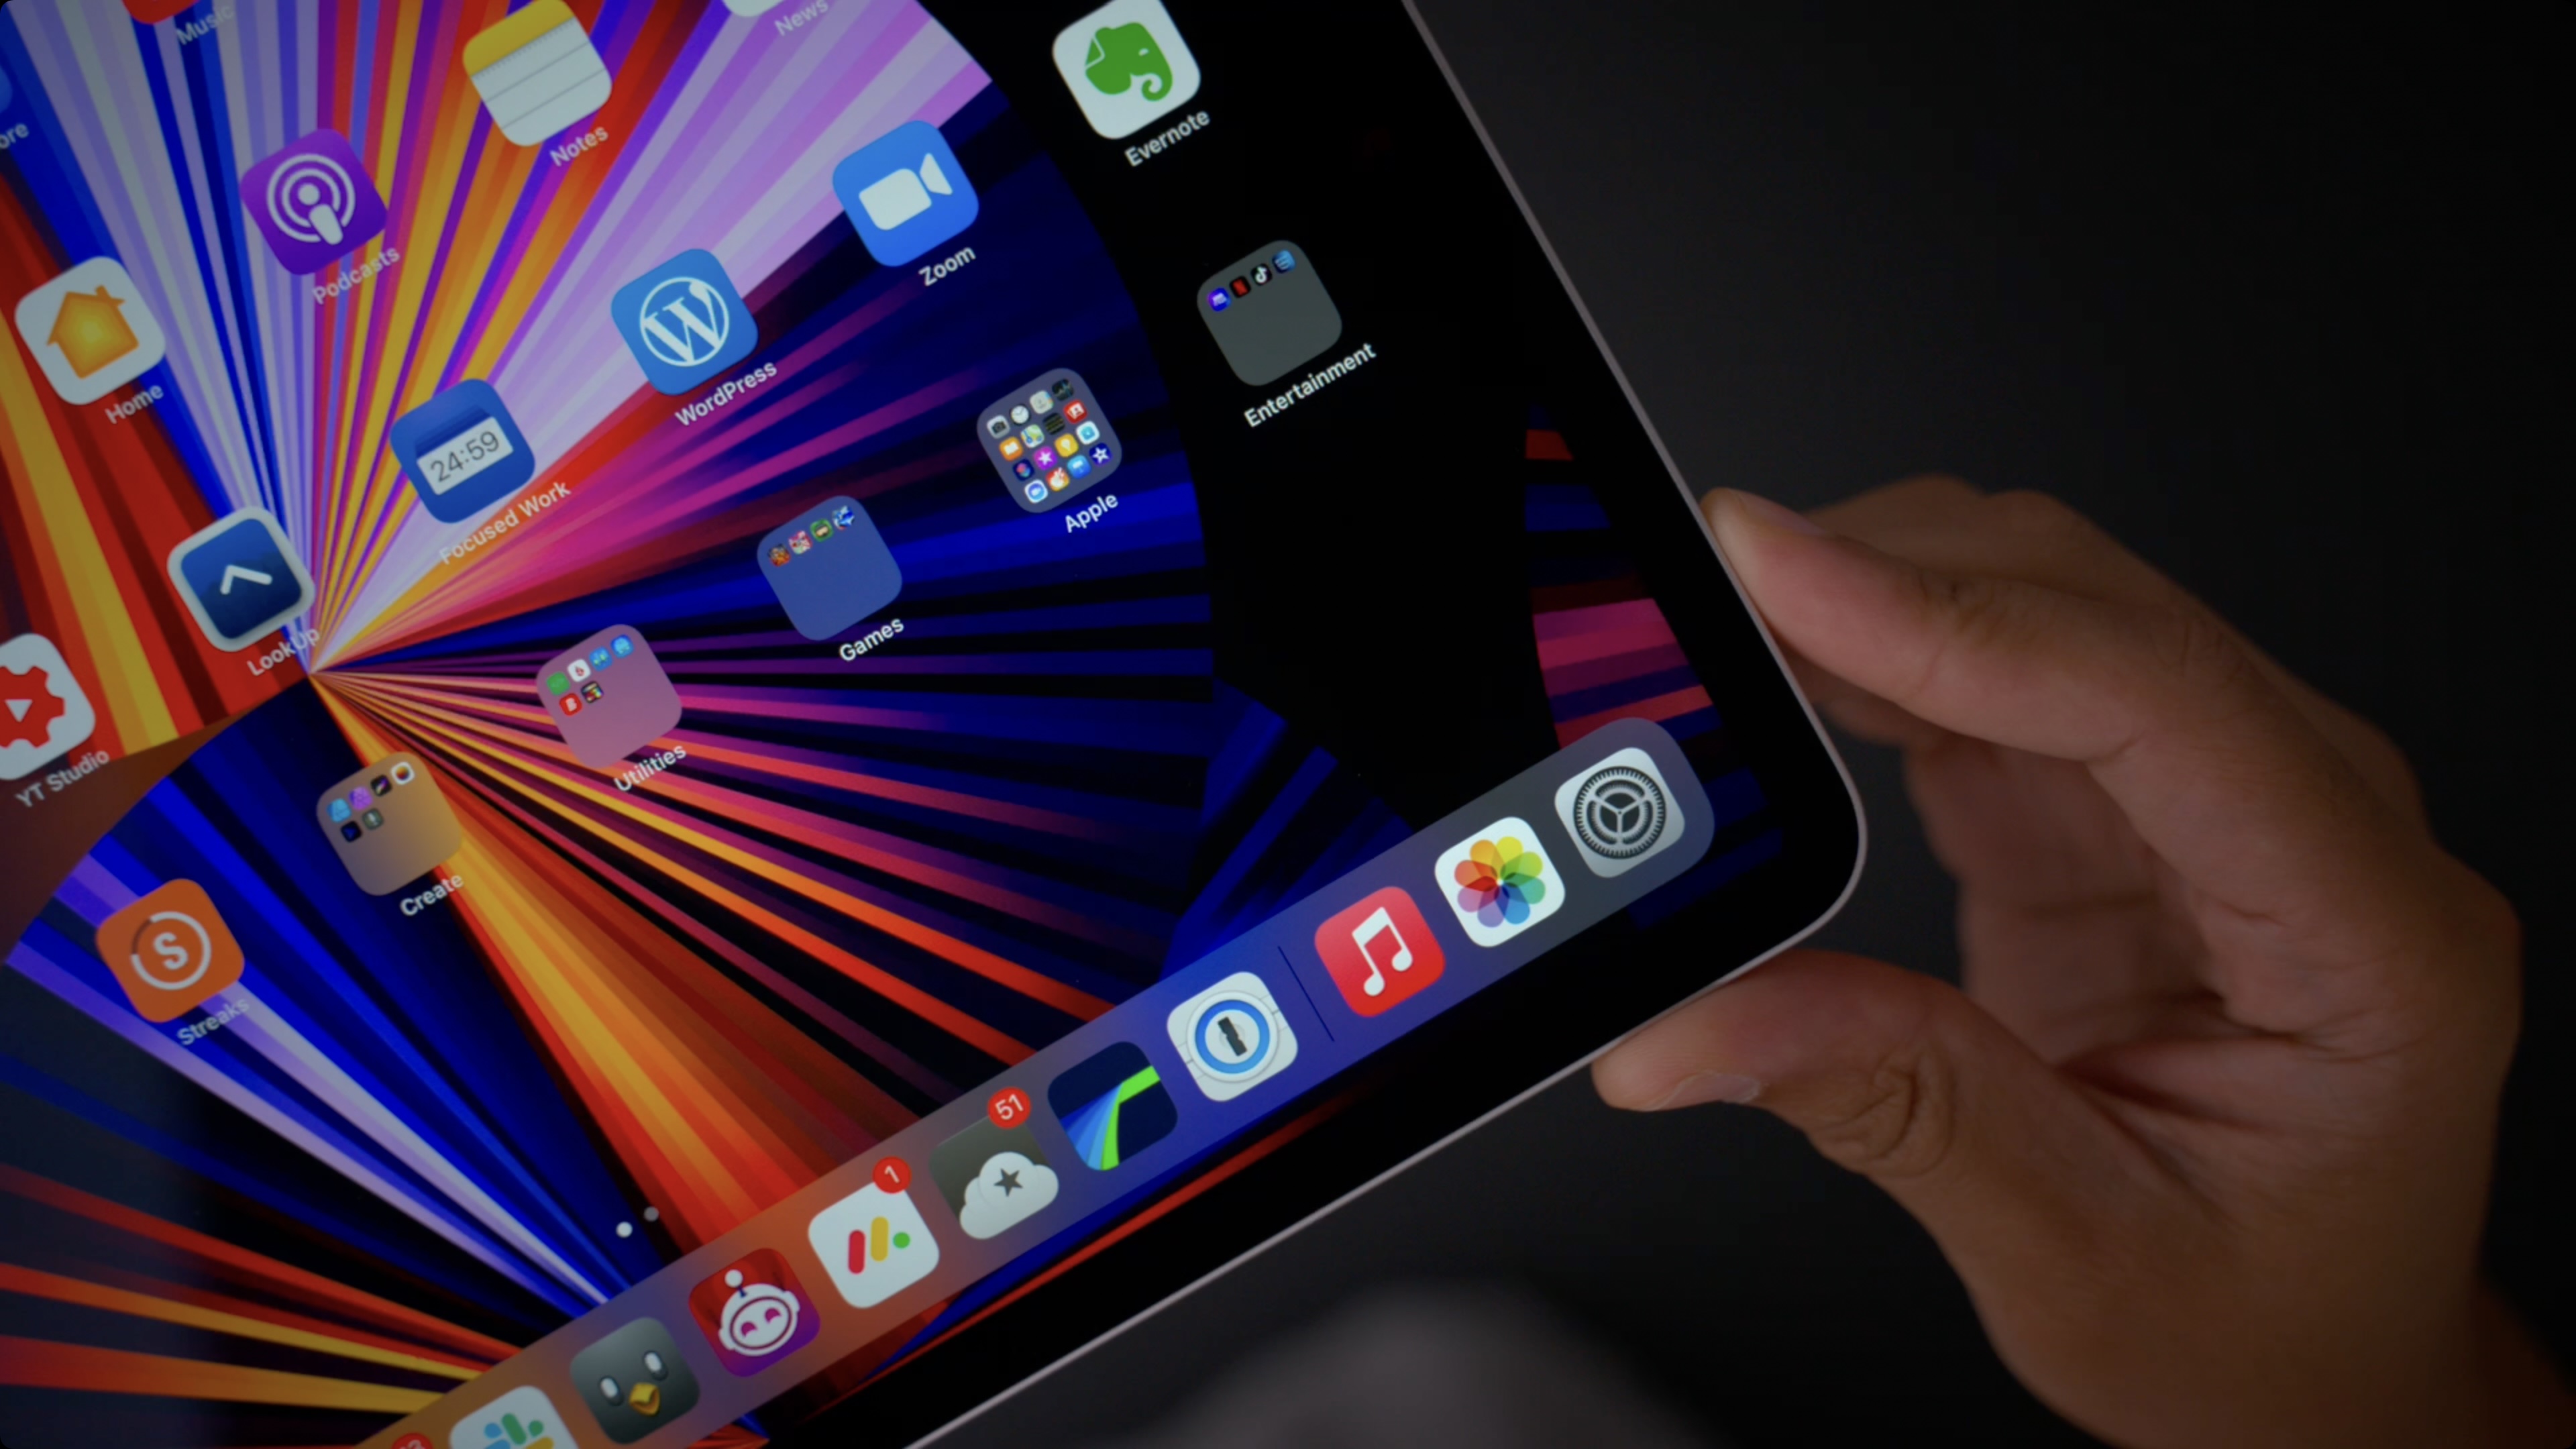 iPad mini 6 is great, but it needs software optimizations - 9to5Mac